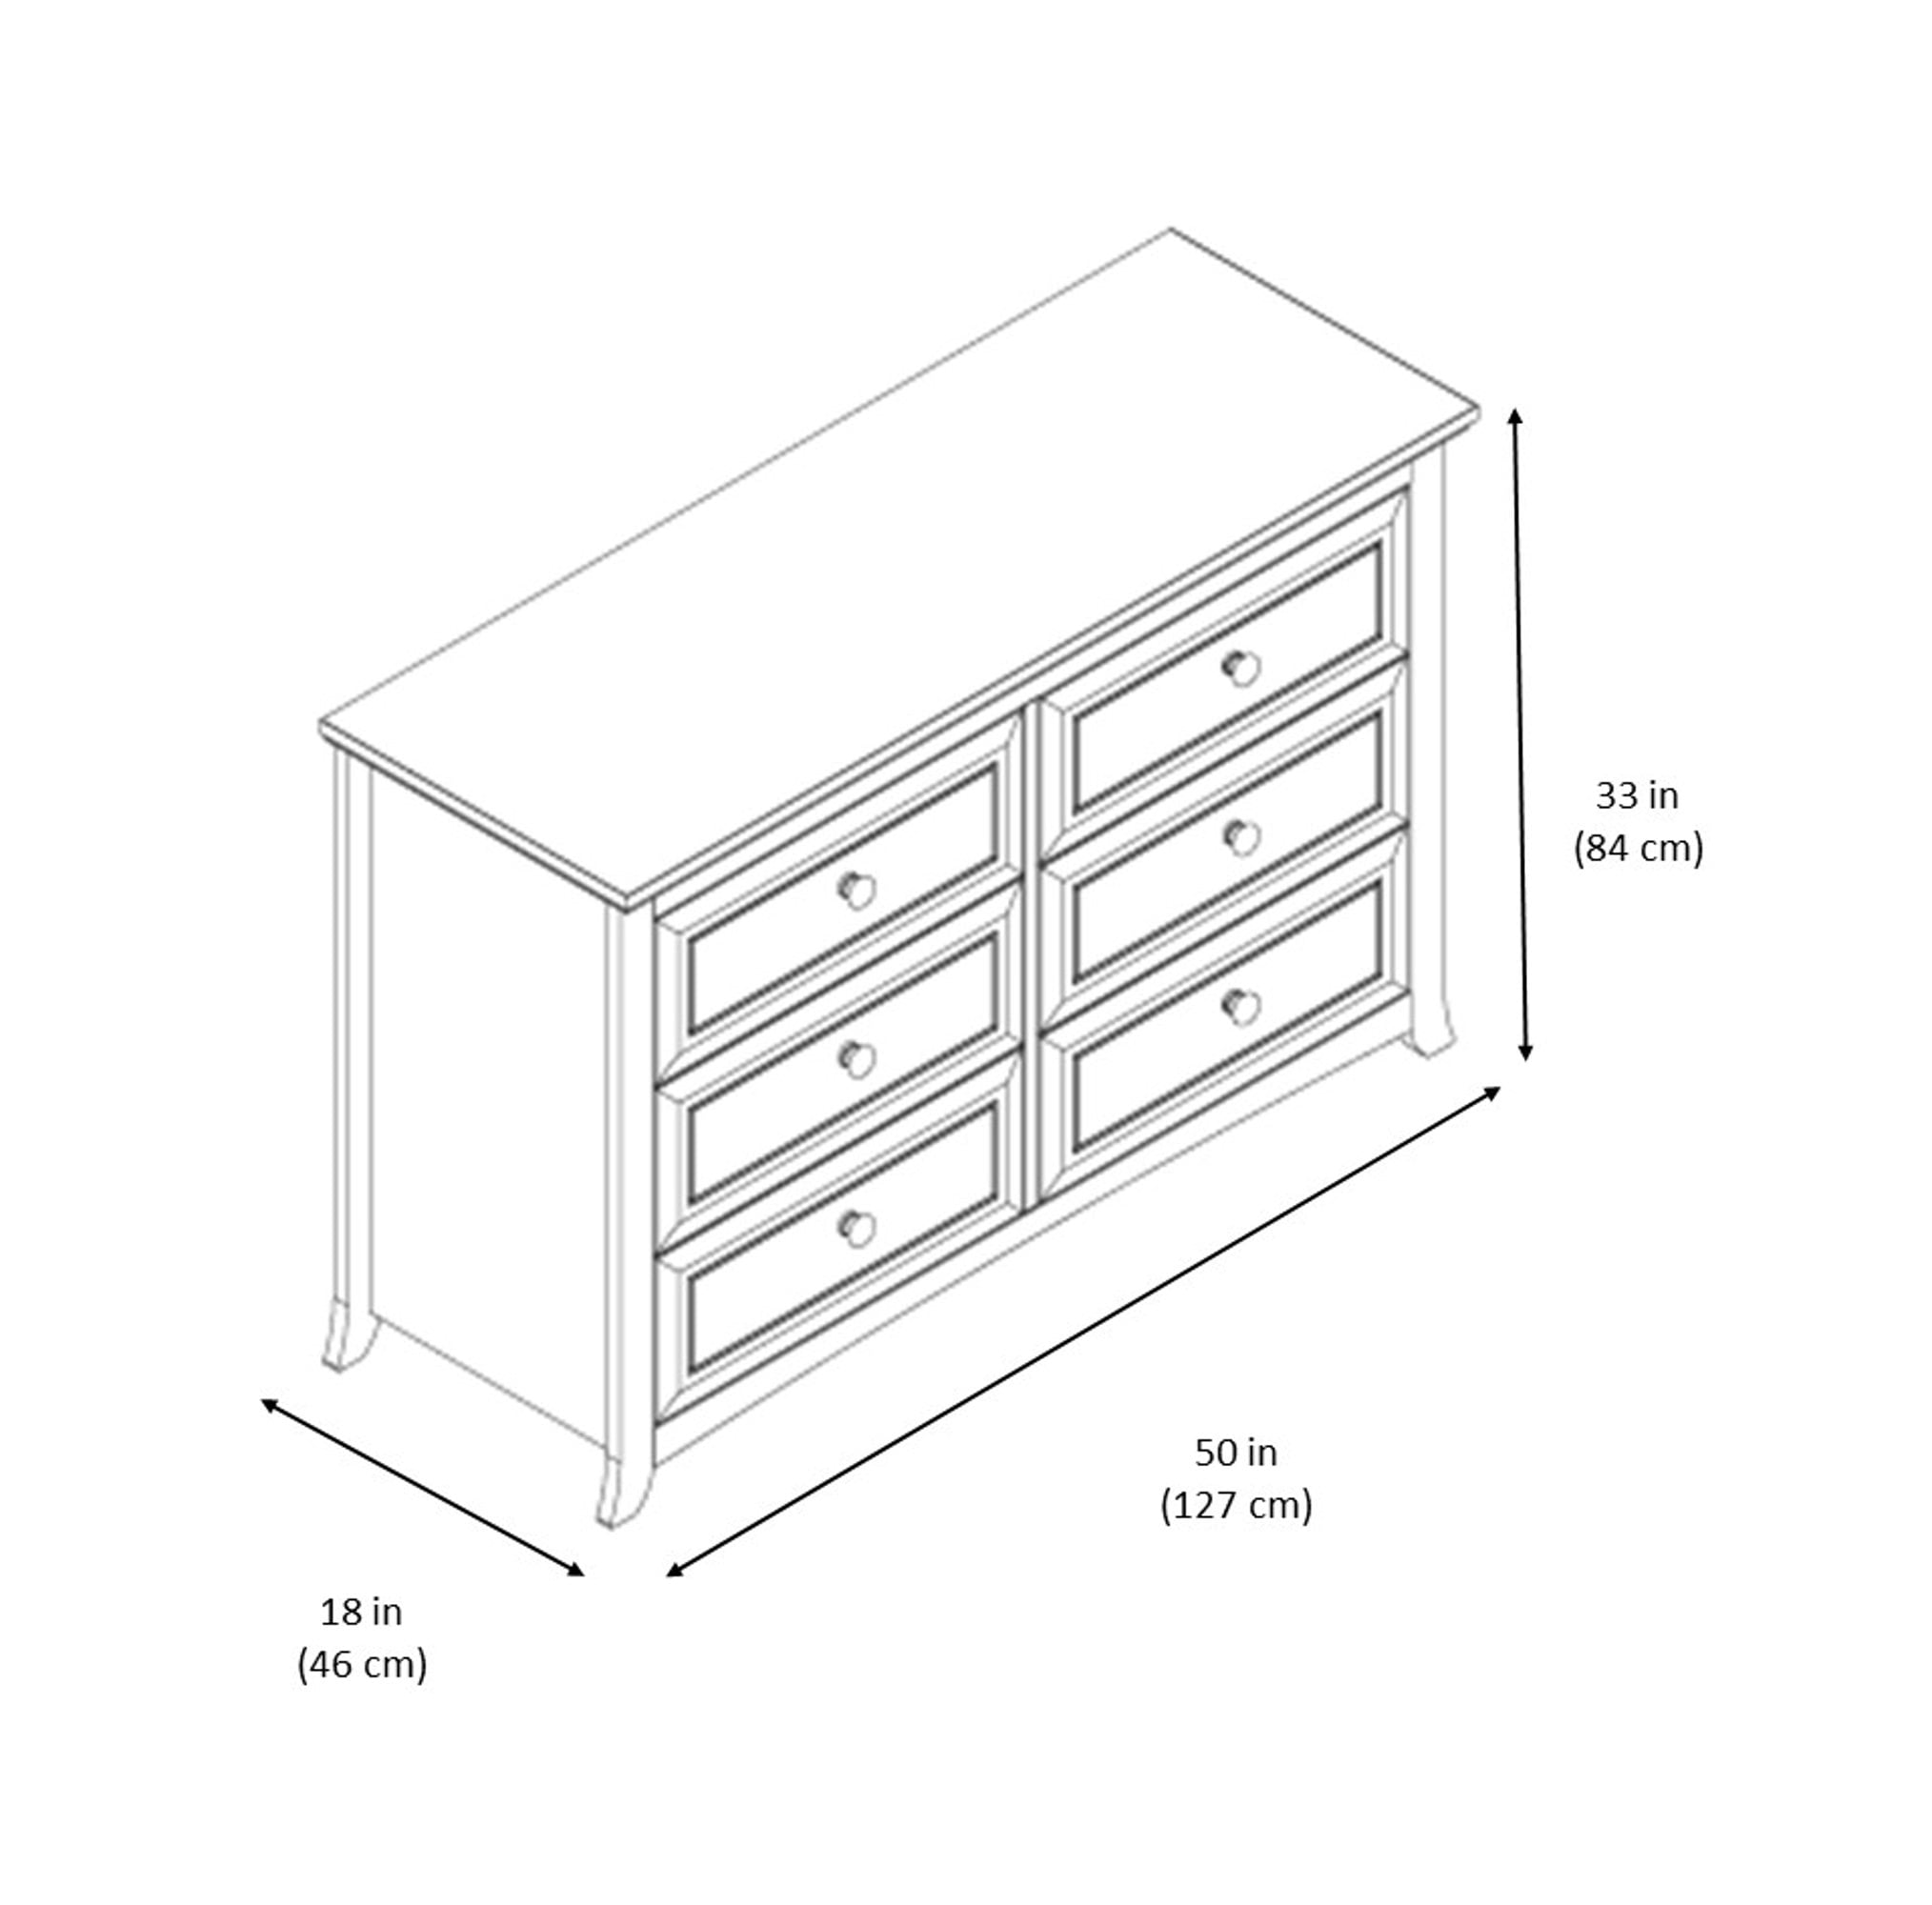 graco kendall 6 drawer dresser